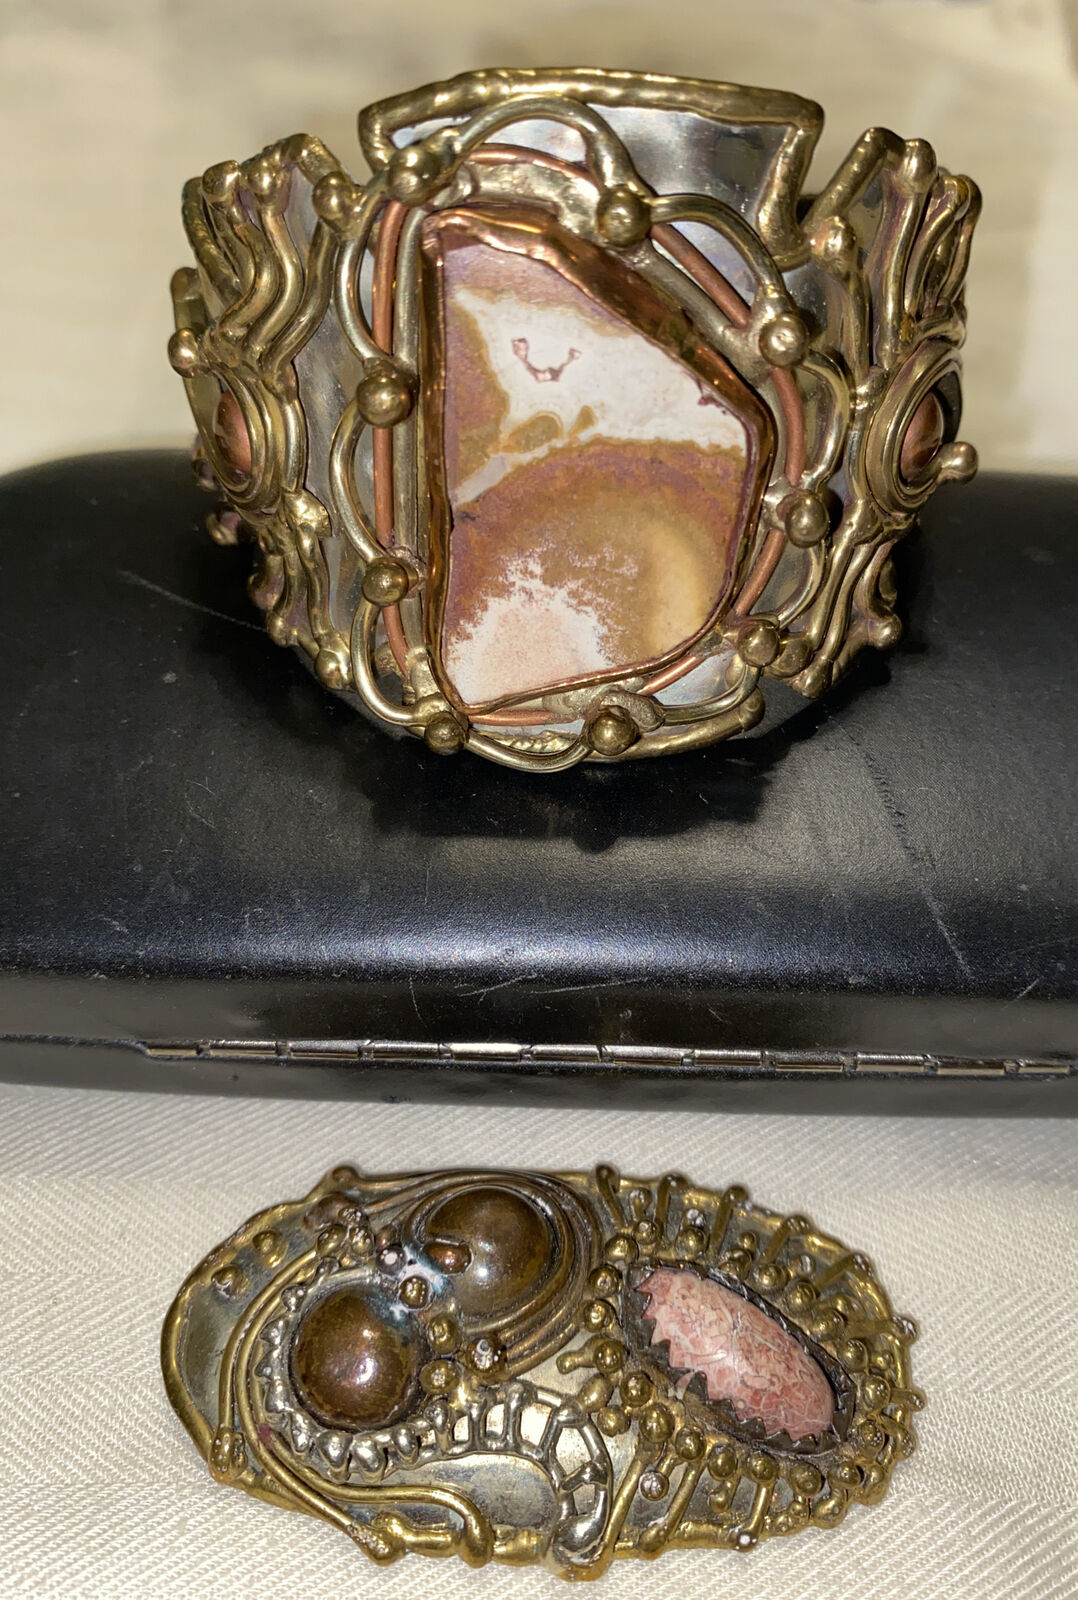 Vintage Handmade Brutalist Cuff Bracelet & Brooch With Stones